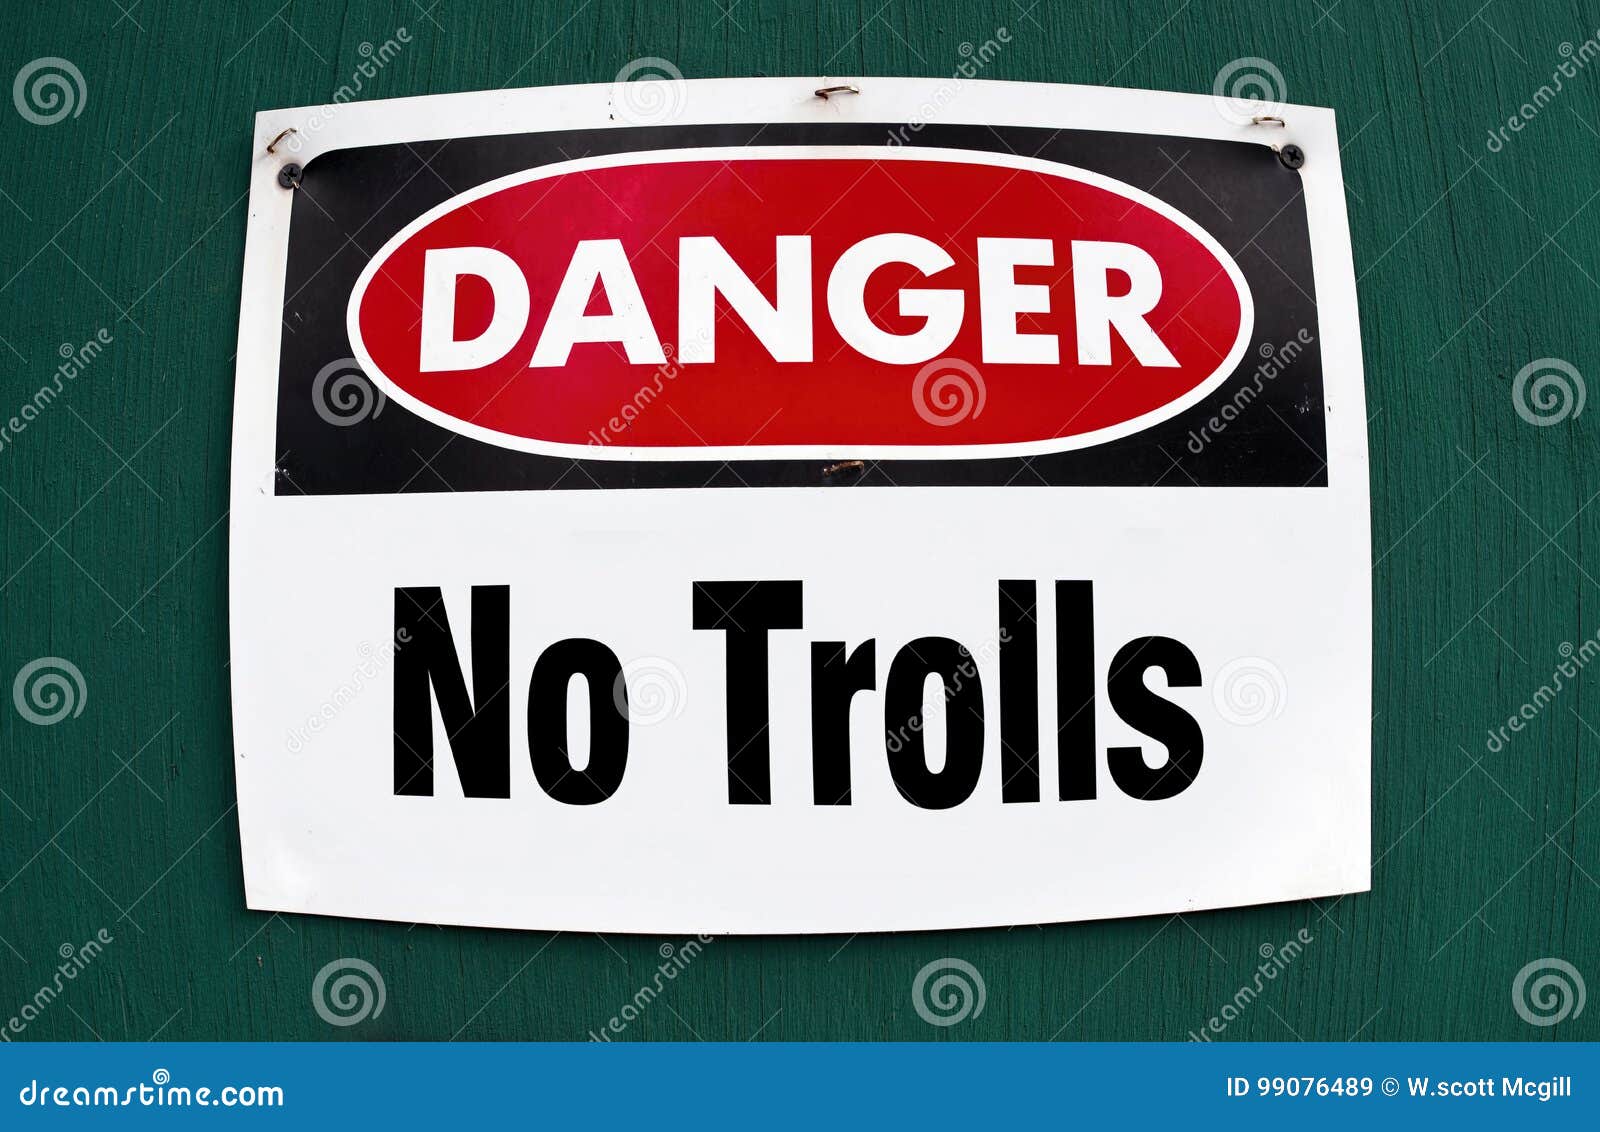 danger no trolls.